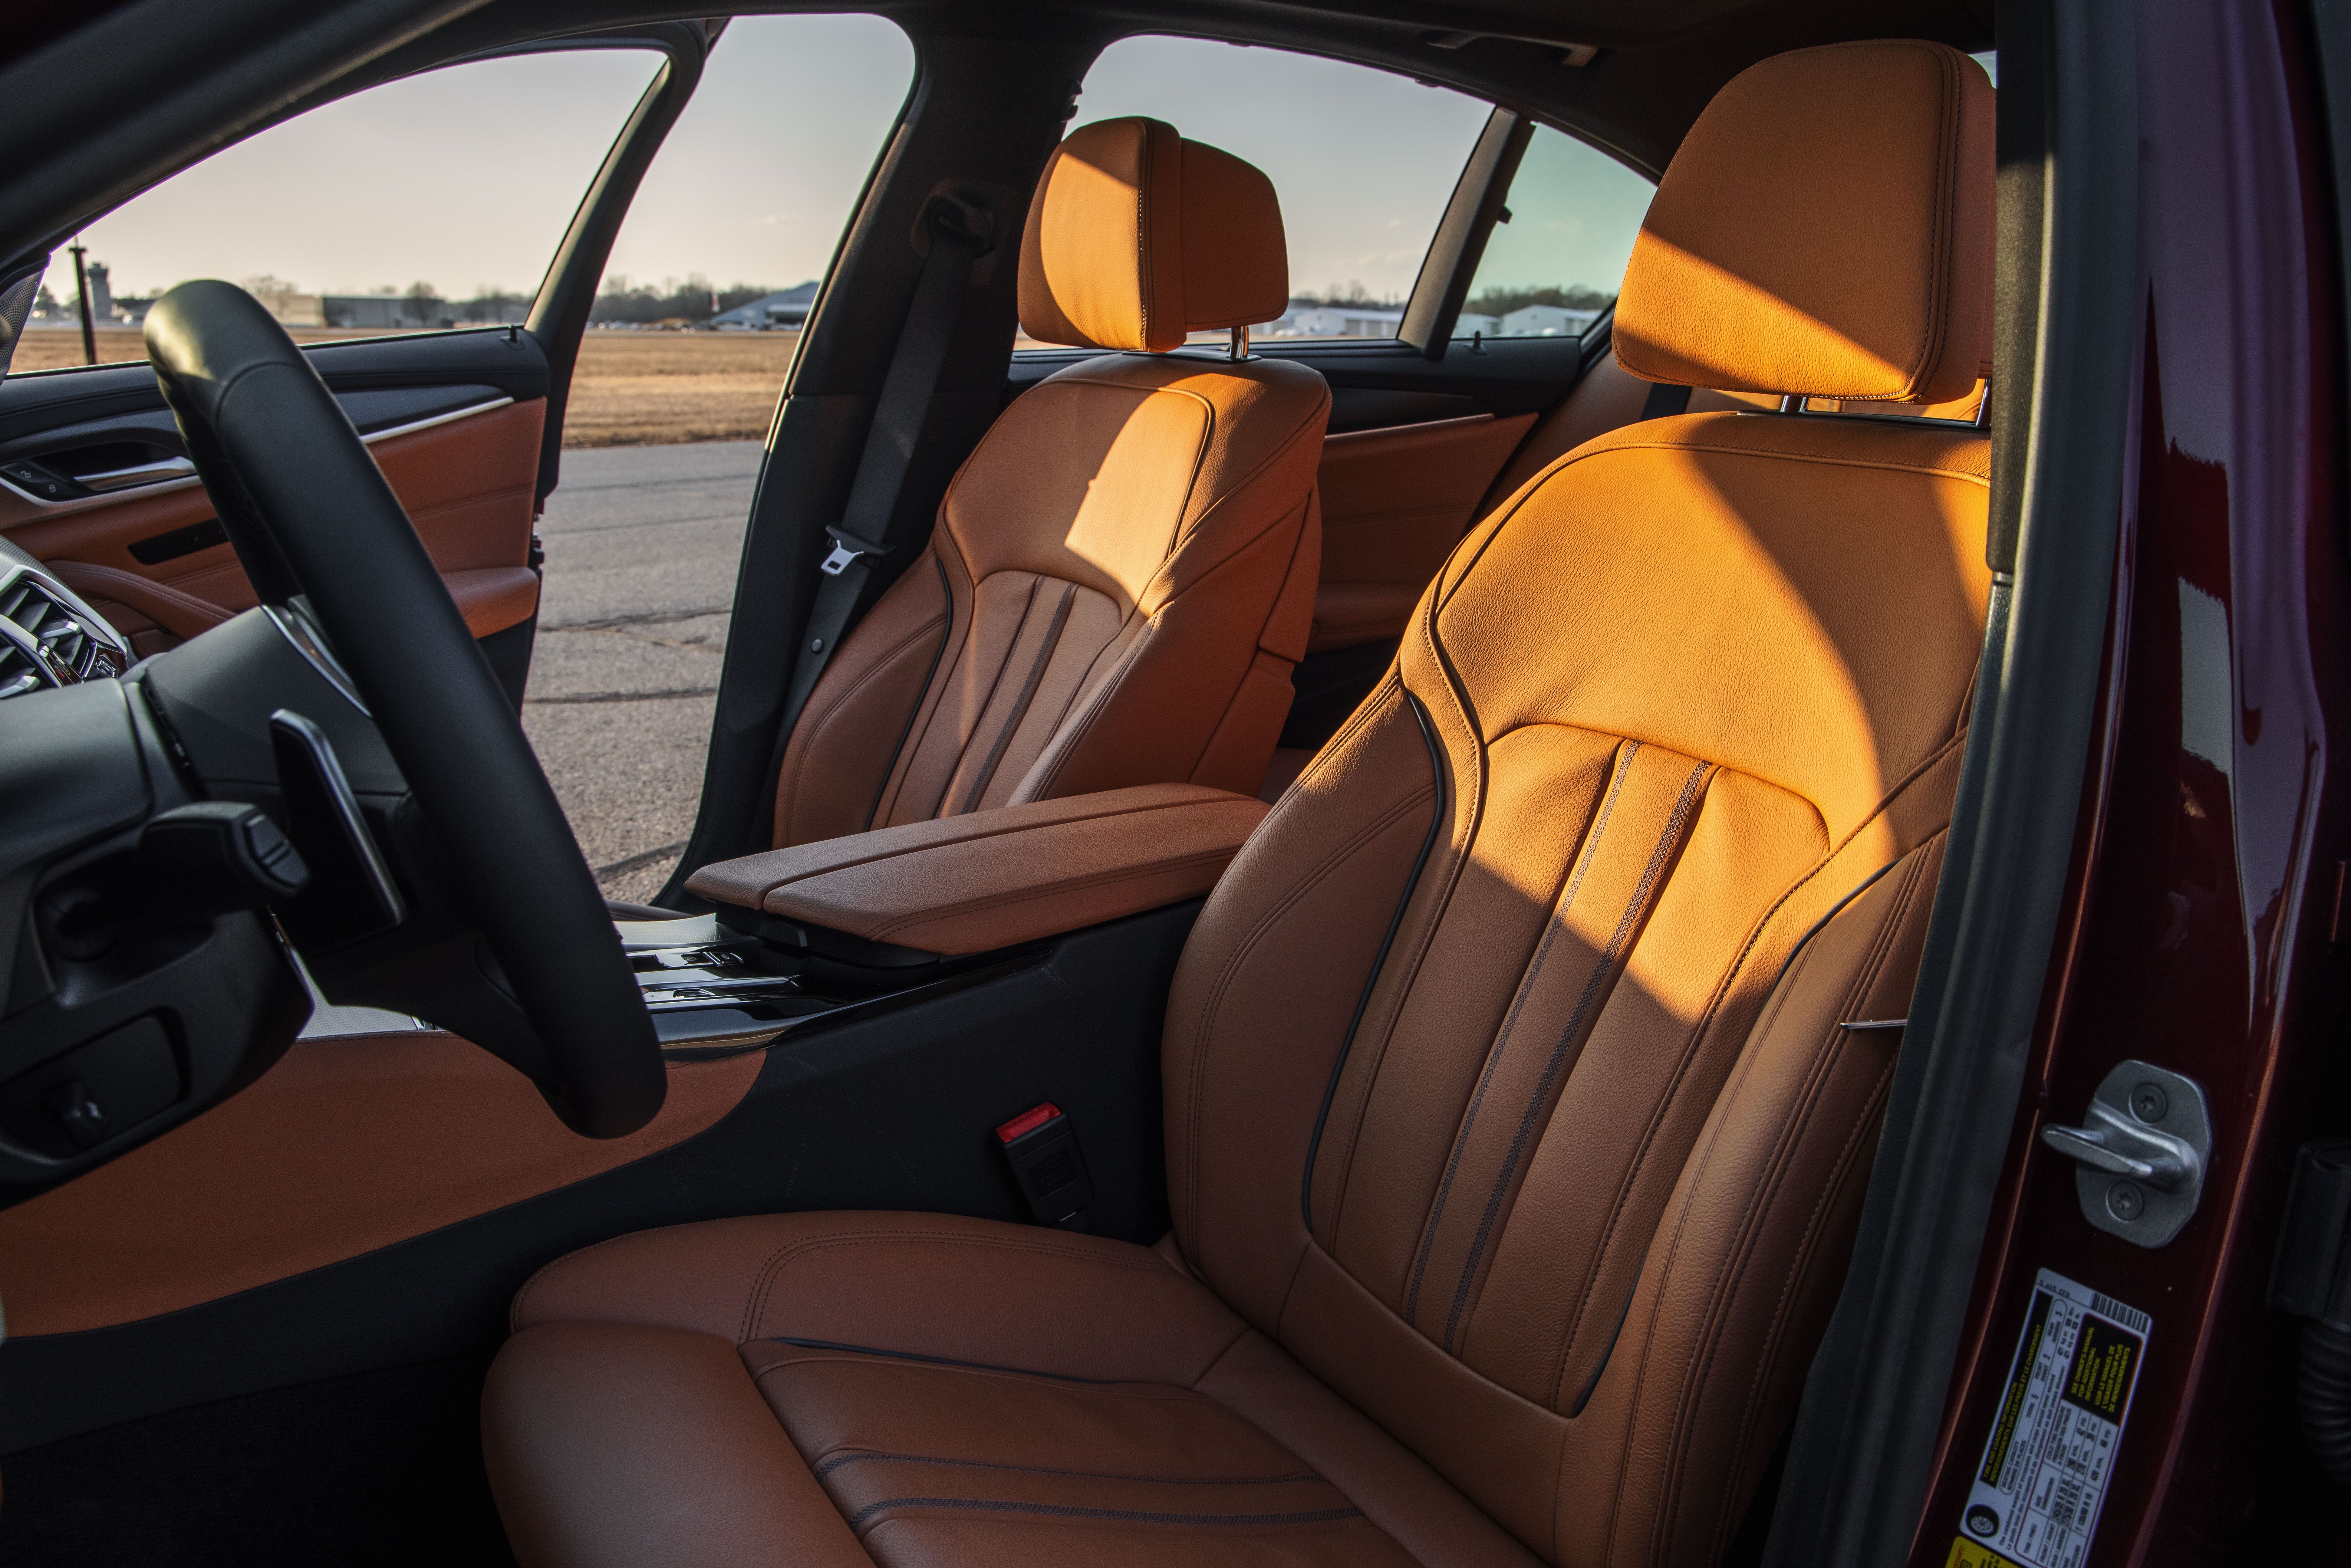 BMW M550i interior - Seats